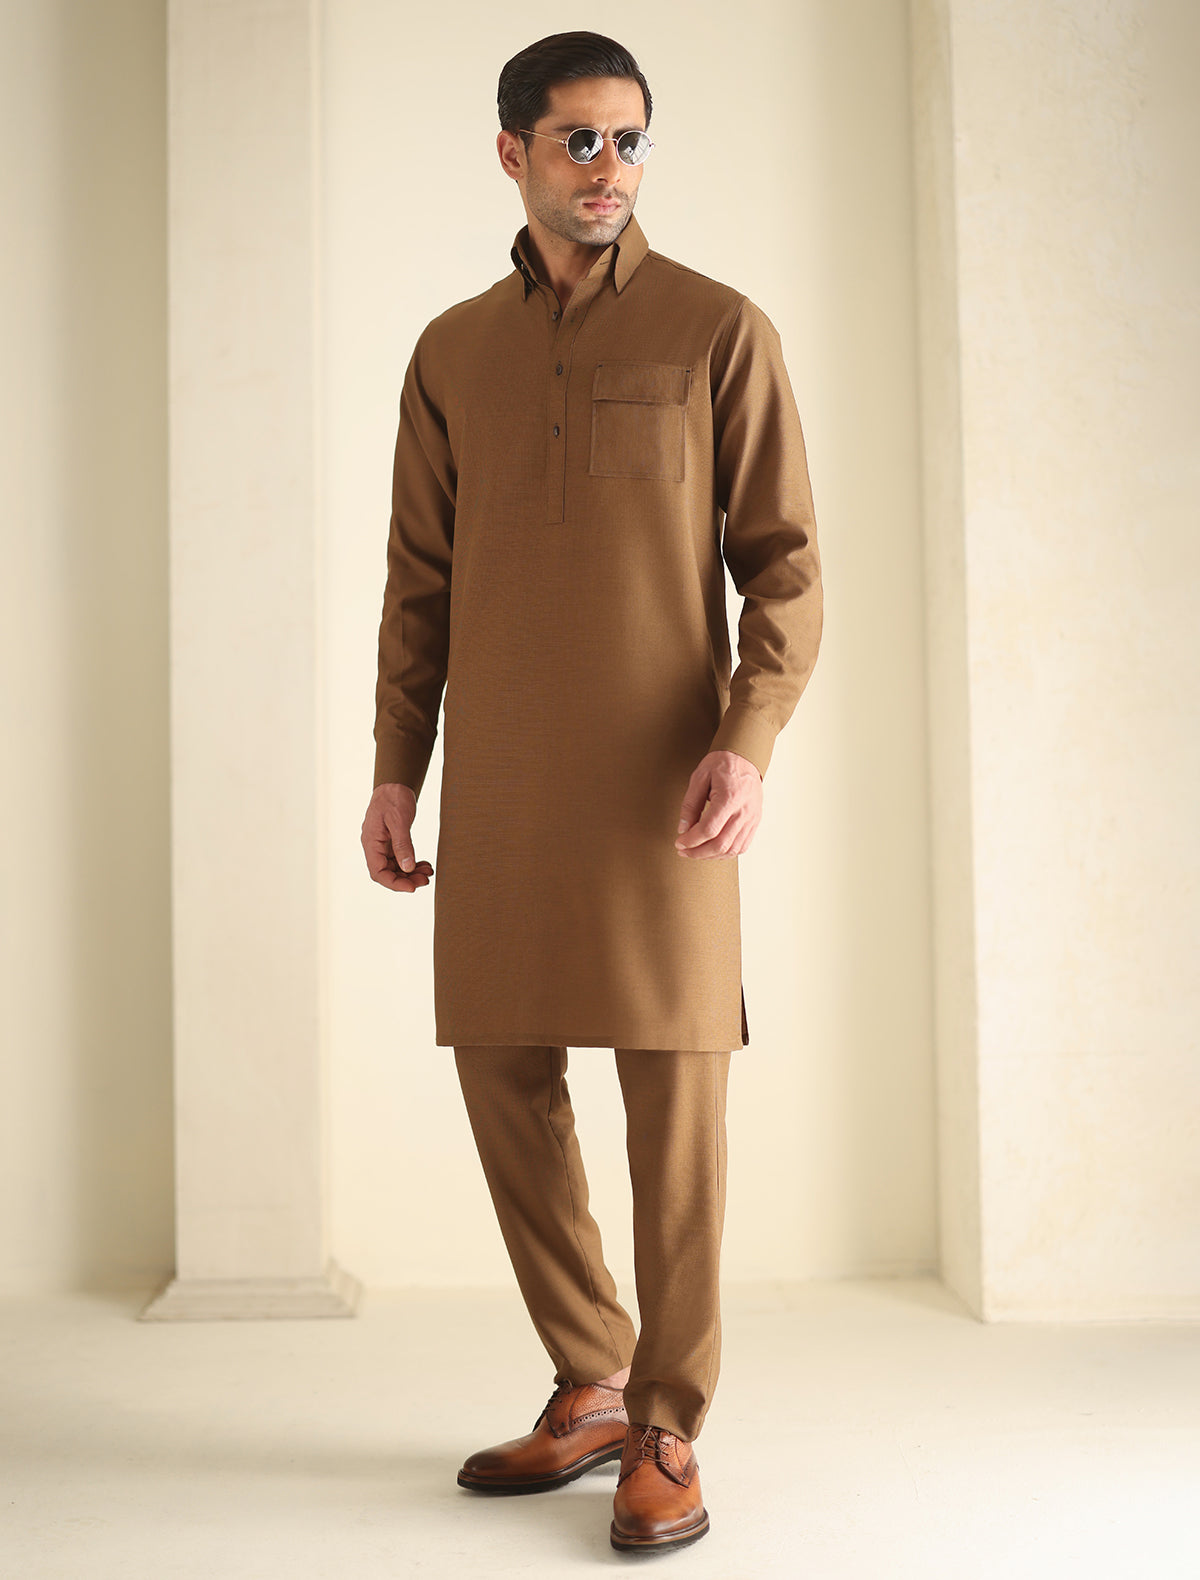 Pakistani Menswear | Ismail Farid - TAN KURTA PAJAMA - Khanumjan  Pakistani Clothes and Designer Dresses in UK, USA 